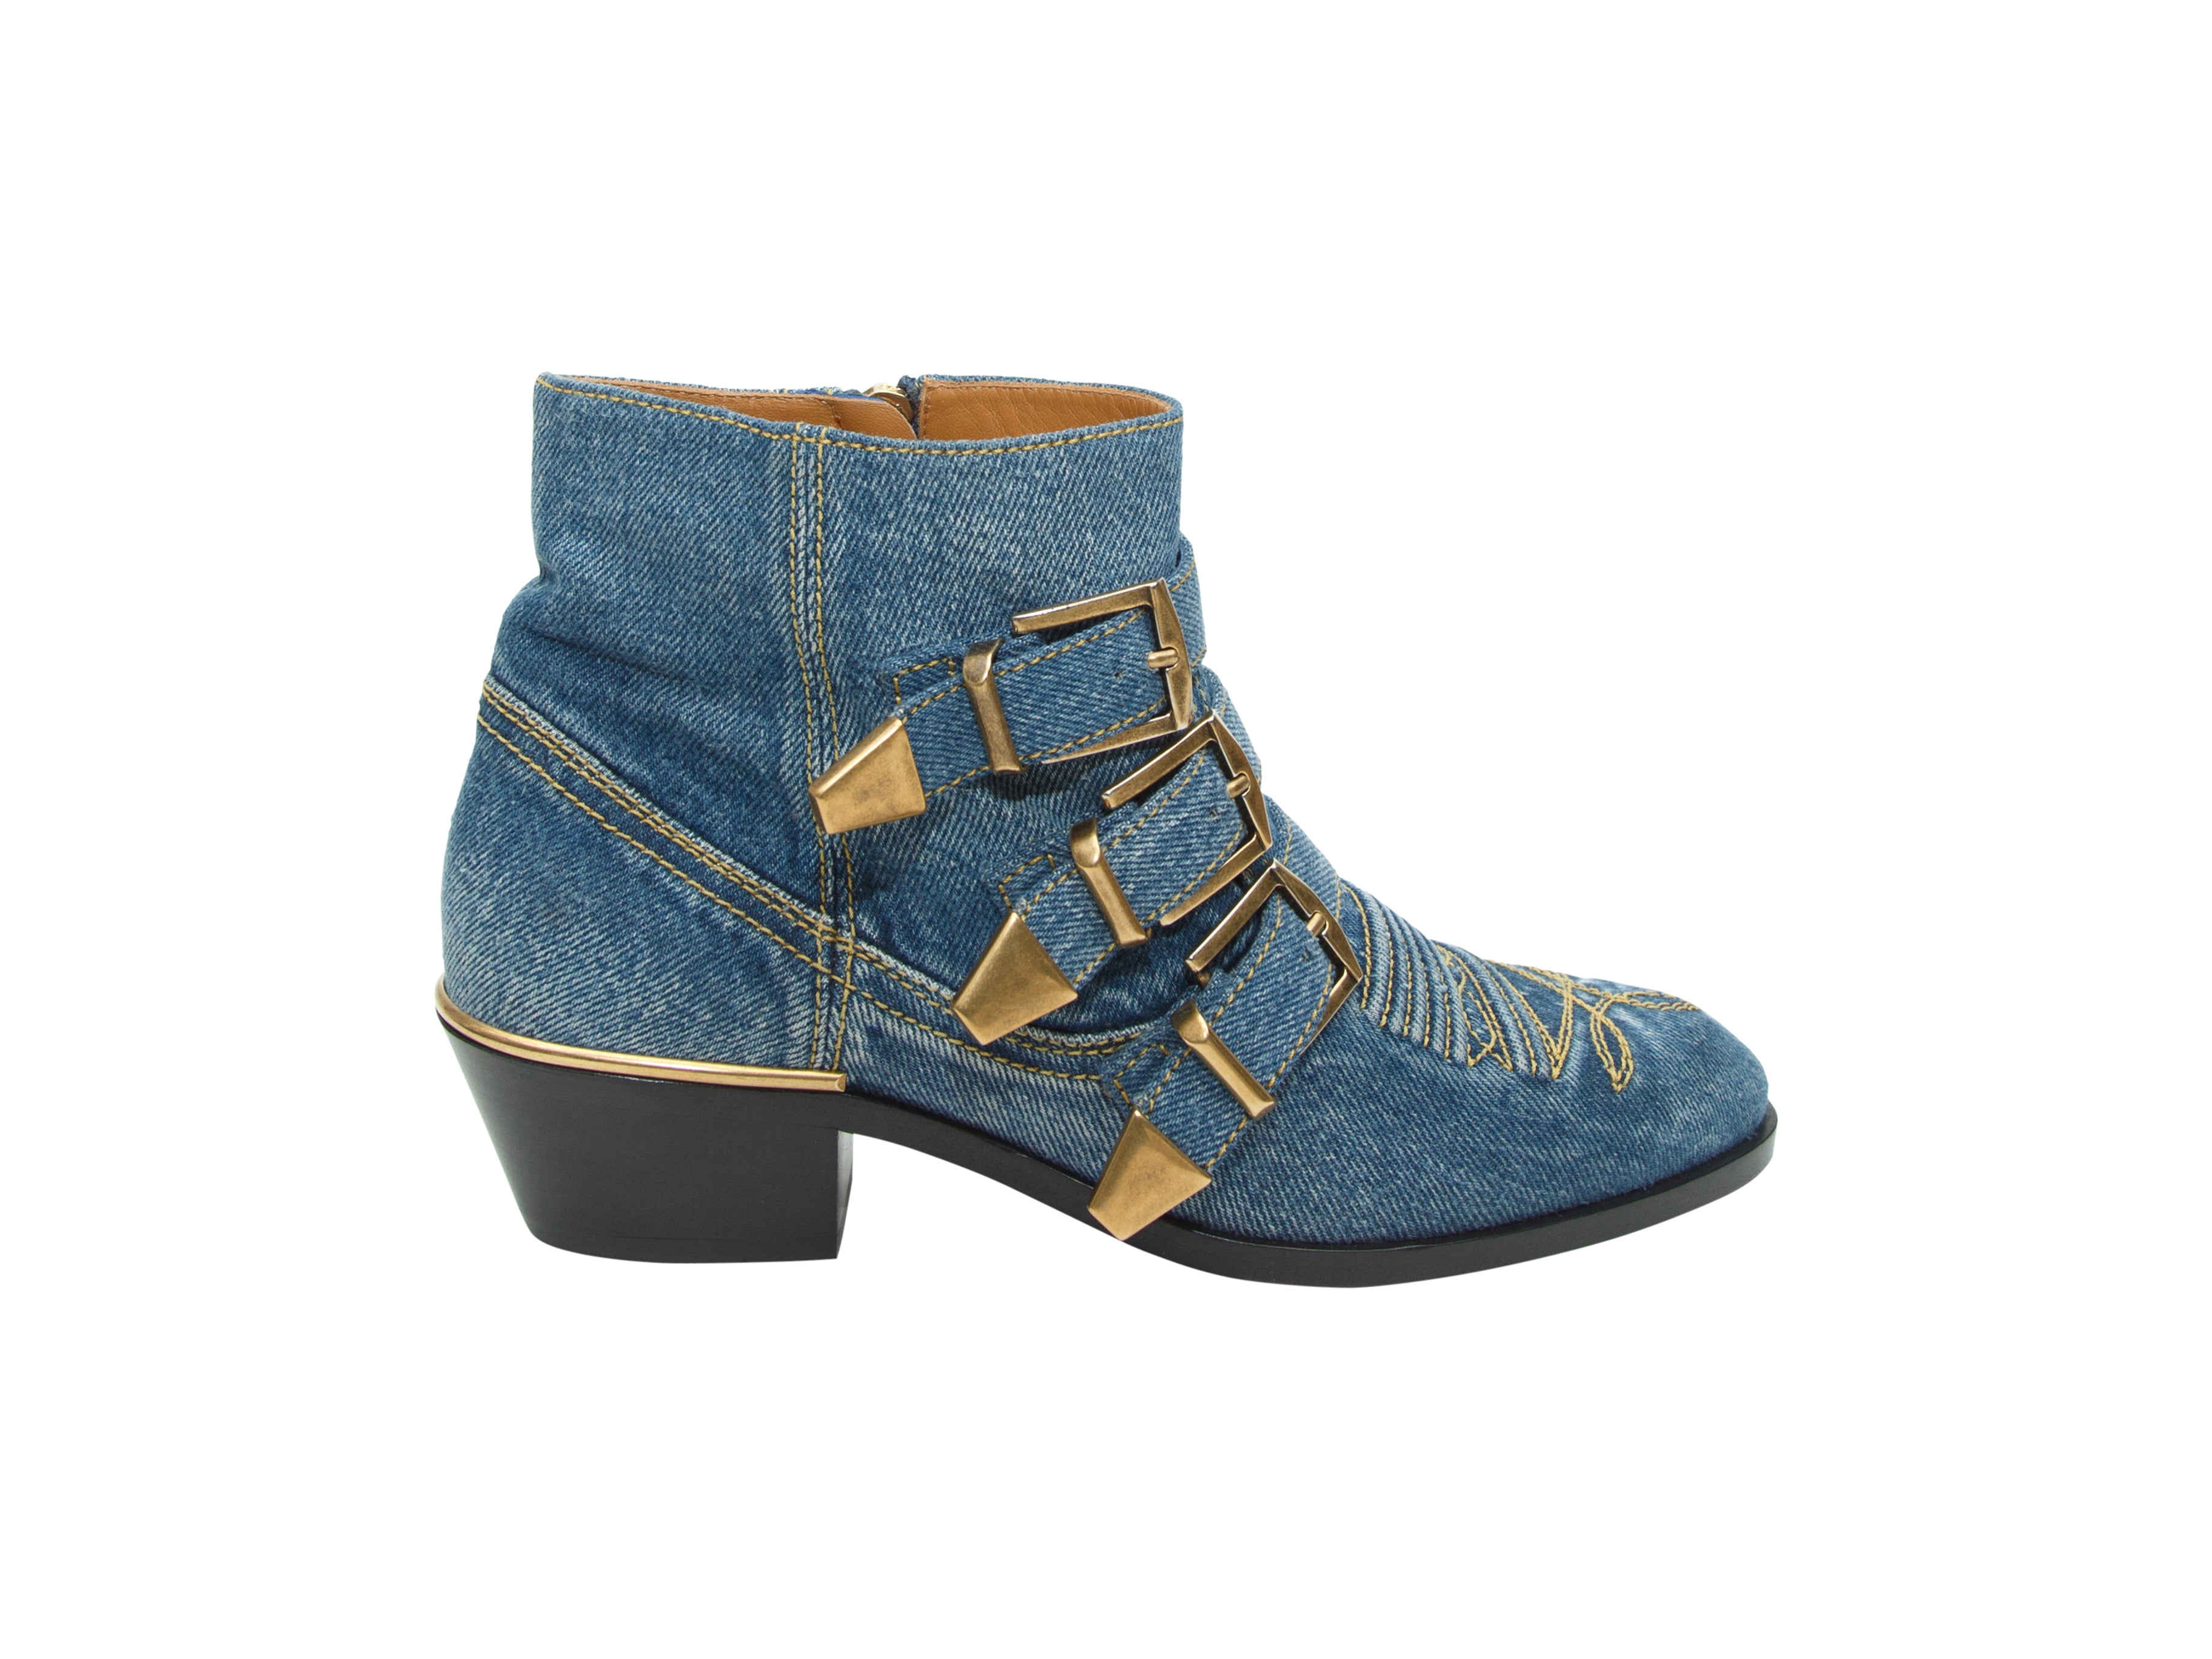 blue denim ankle boots